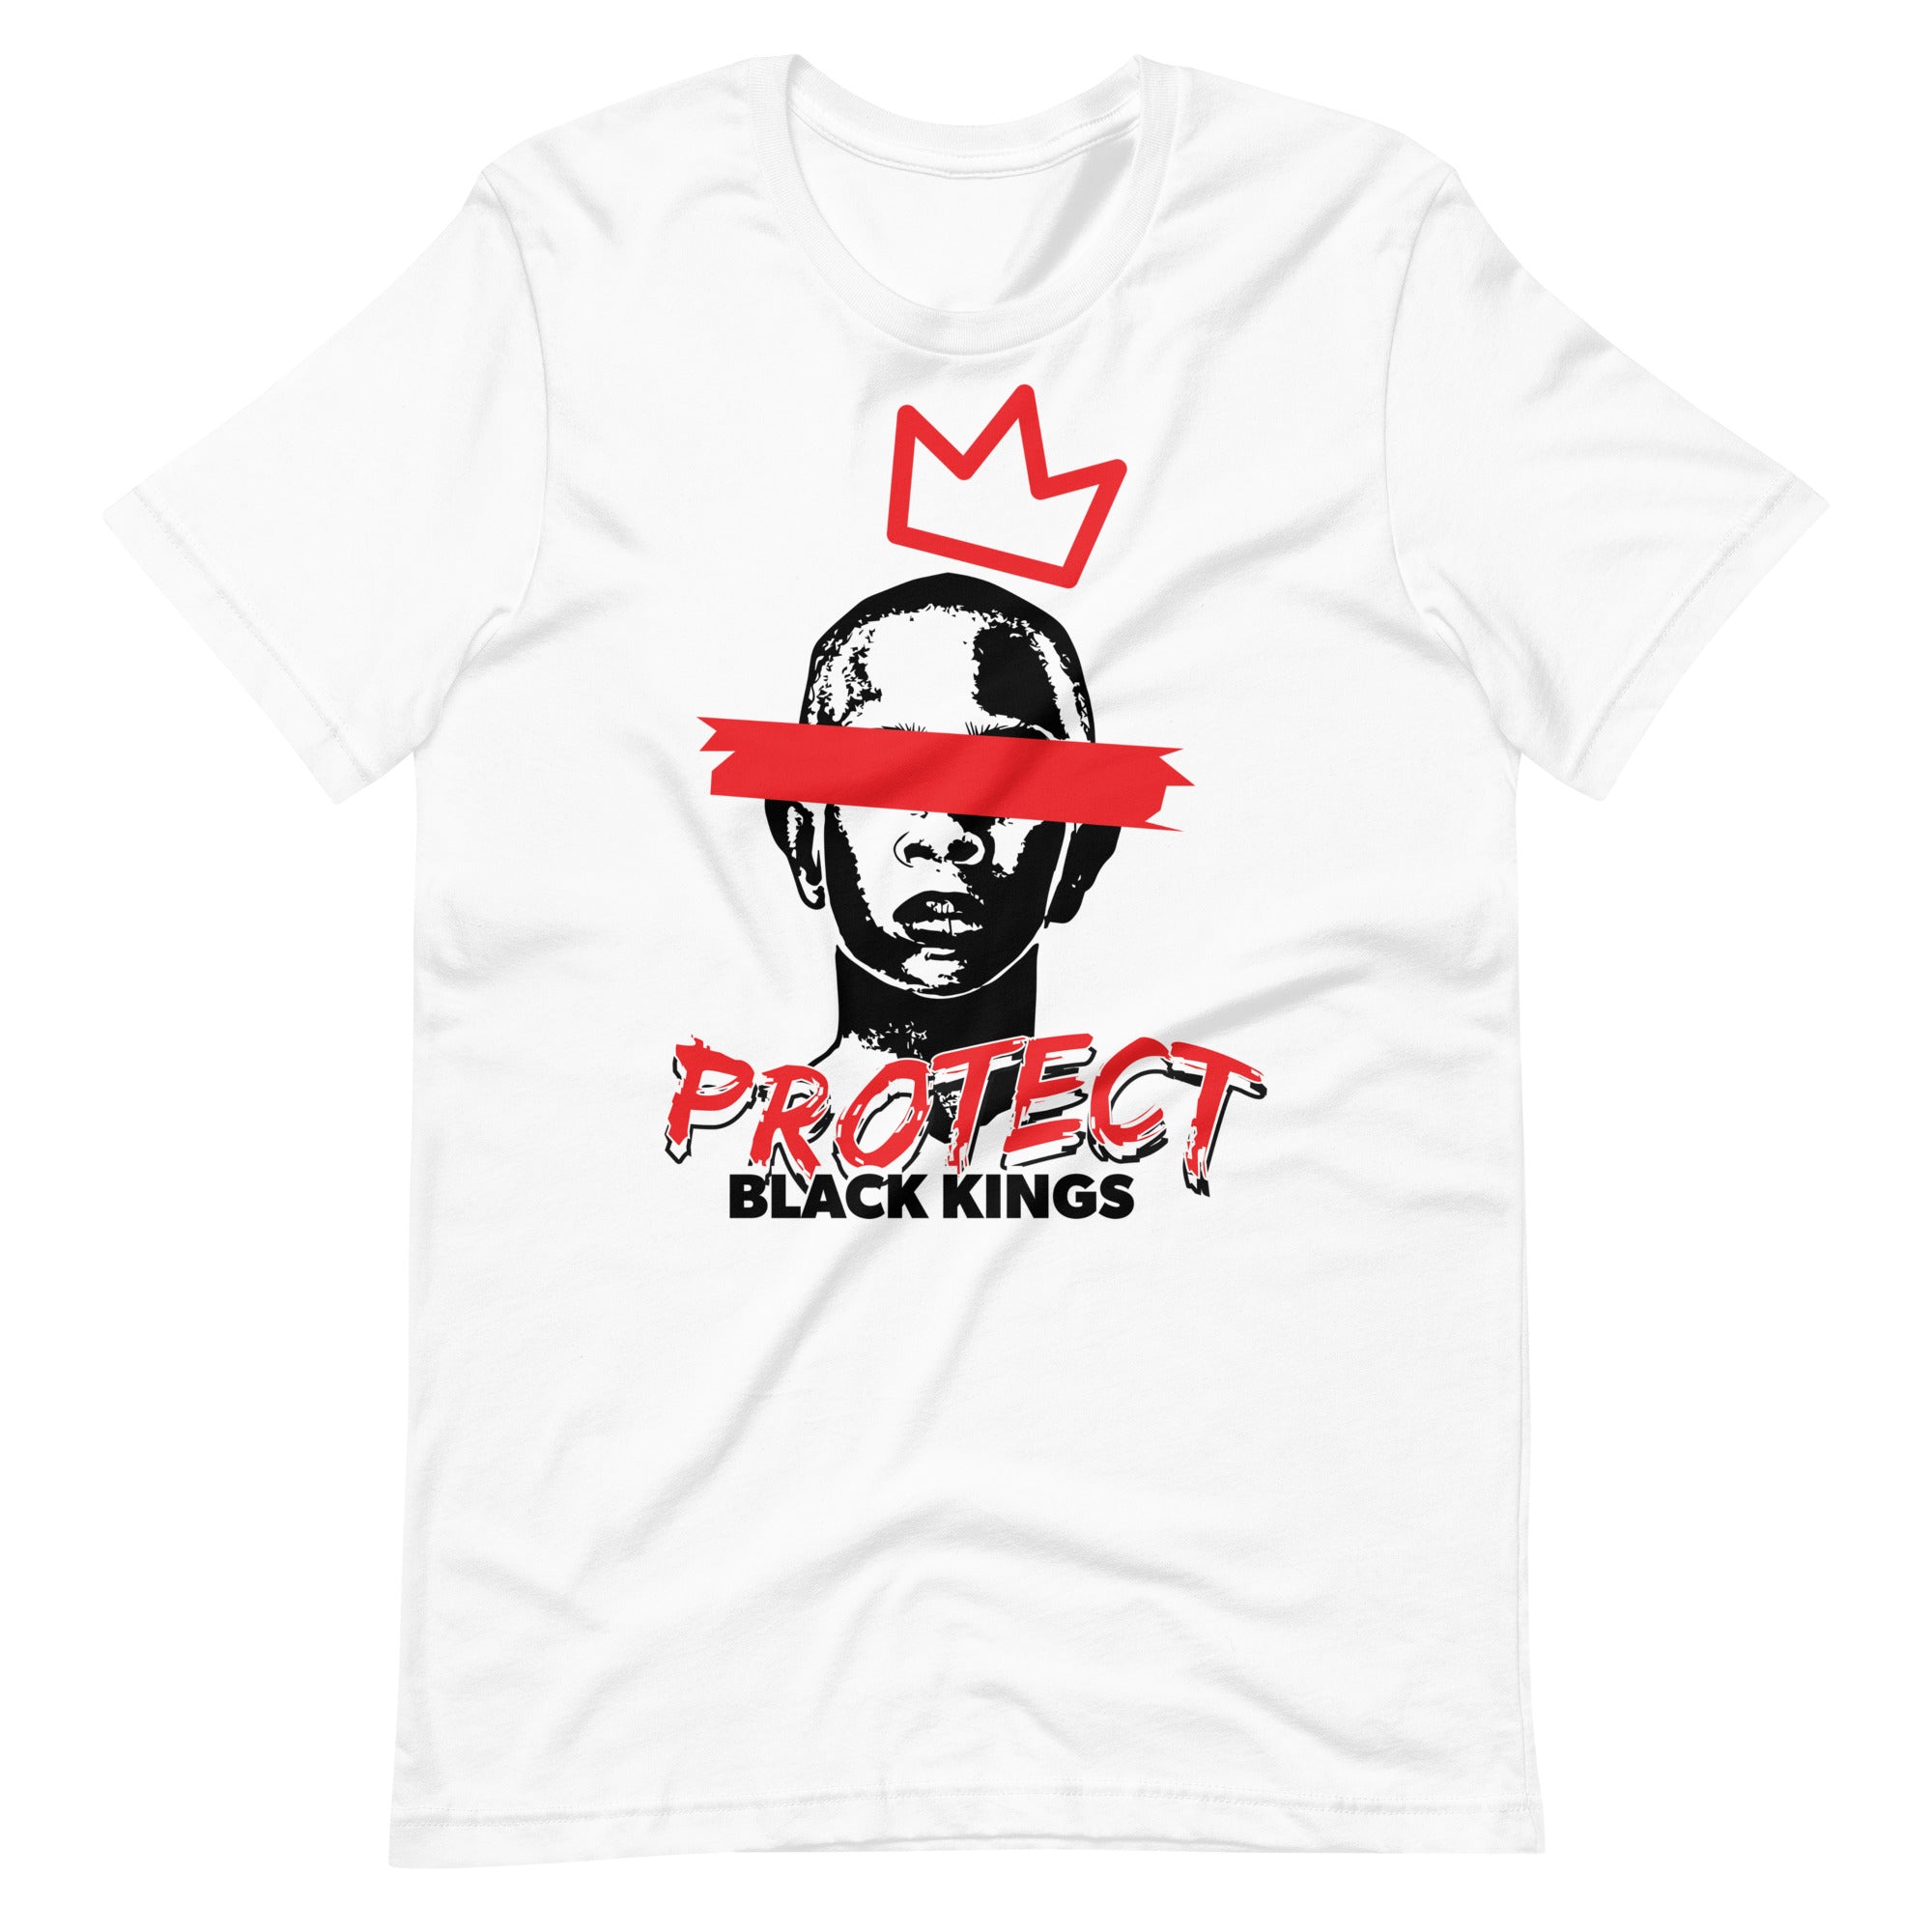 Protect Black Kings